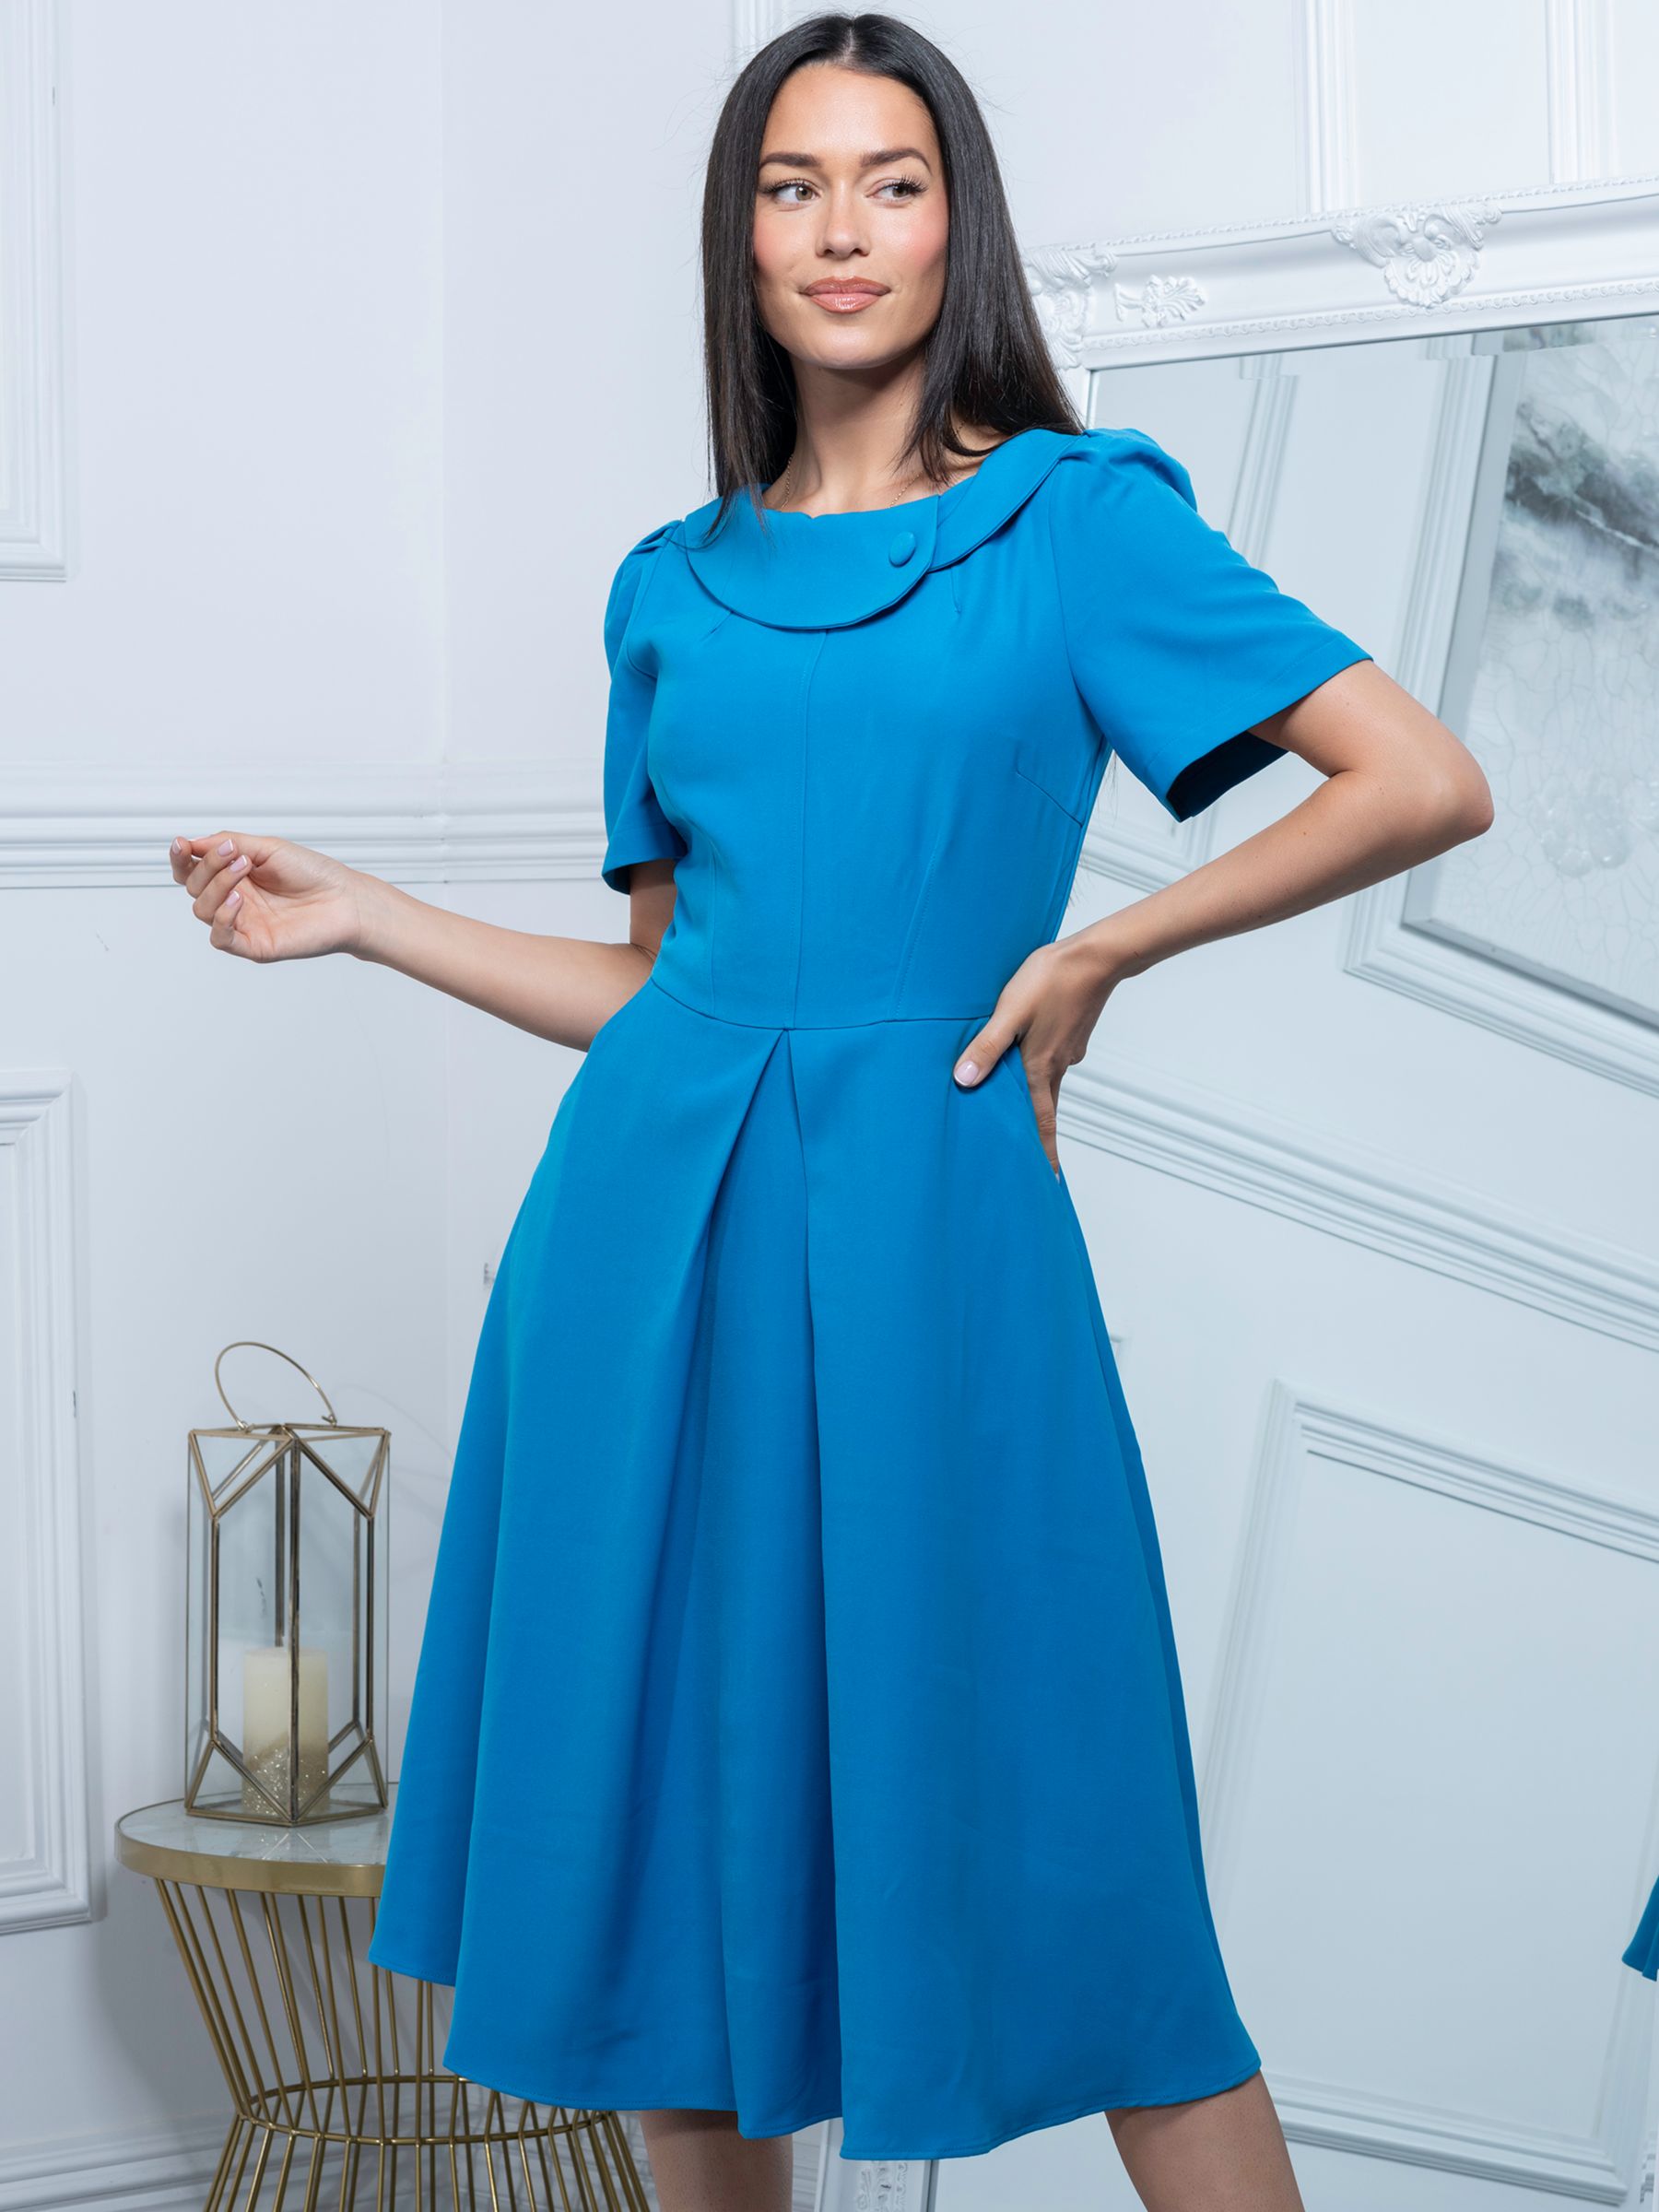 Jolie Moi Deborah Ponte De Roma Dress, Blue at John Lewis & Partners